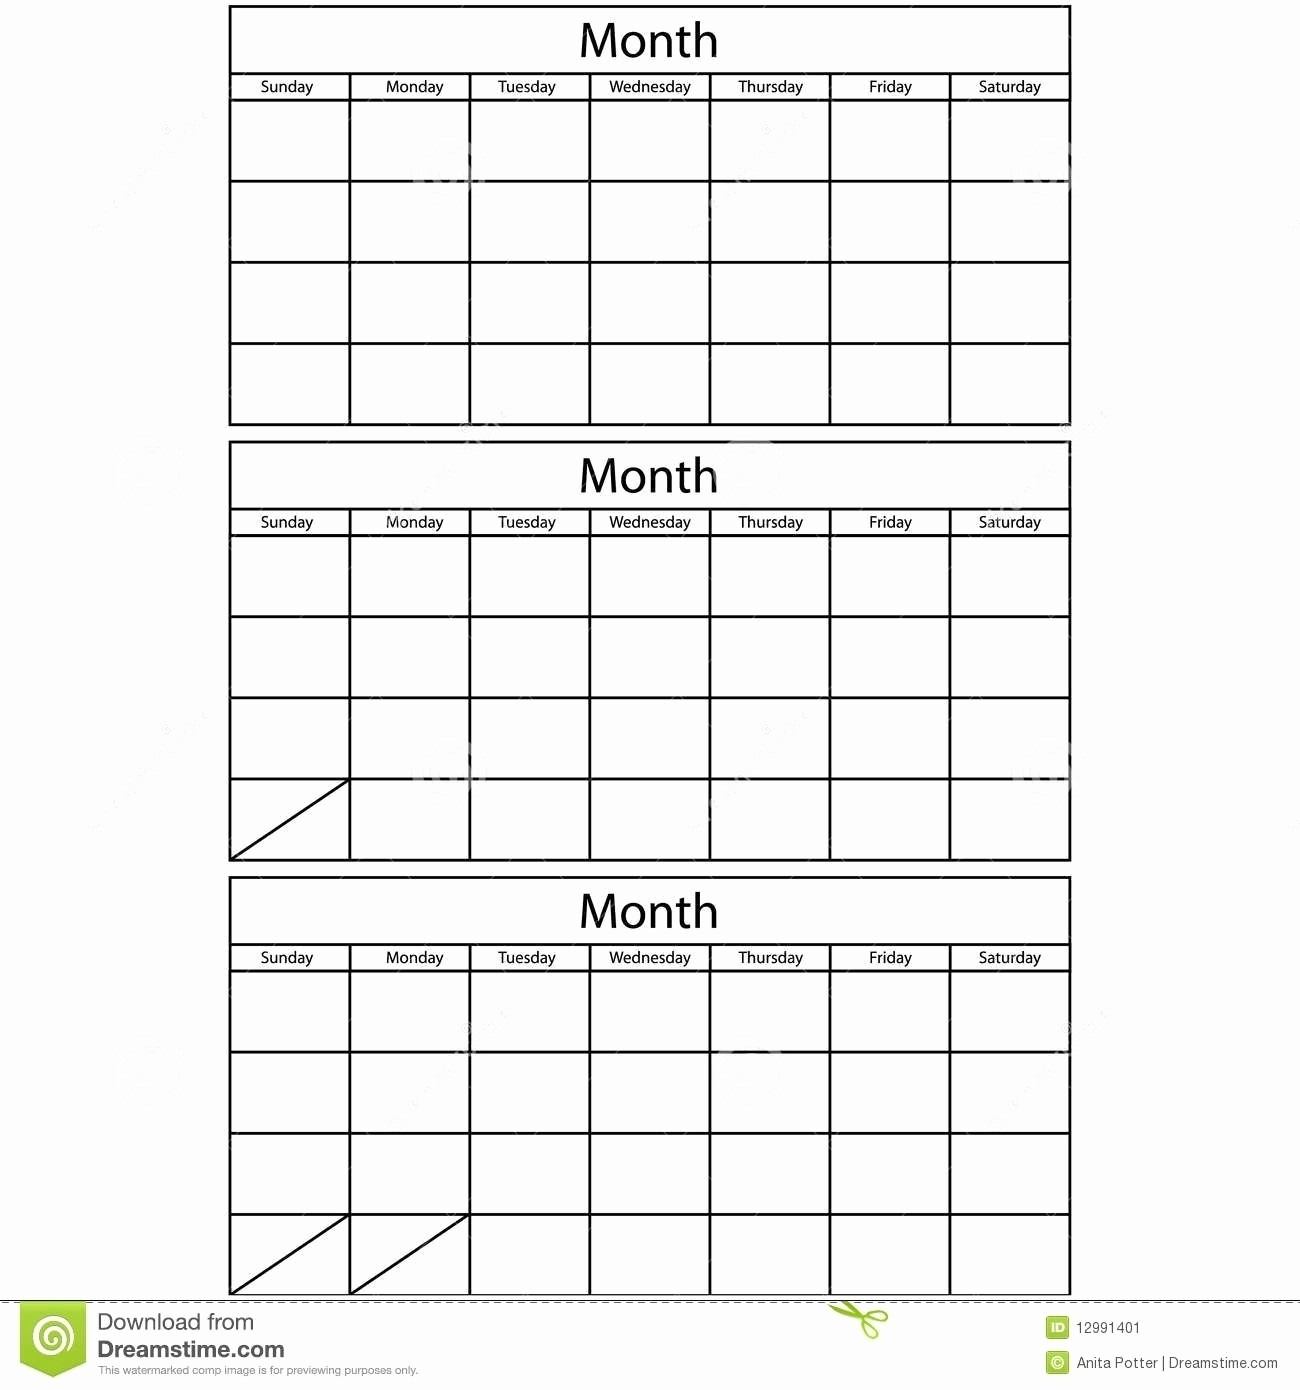 3 Month Planning Calendar Printable  Calendar Inspiration intended for Printable Calendar 3 Month